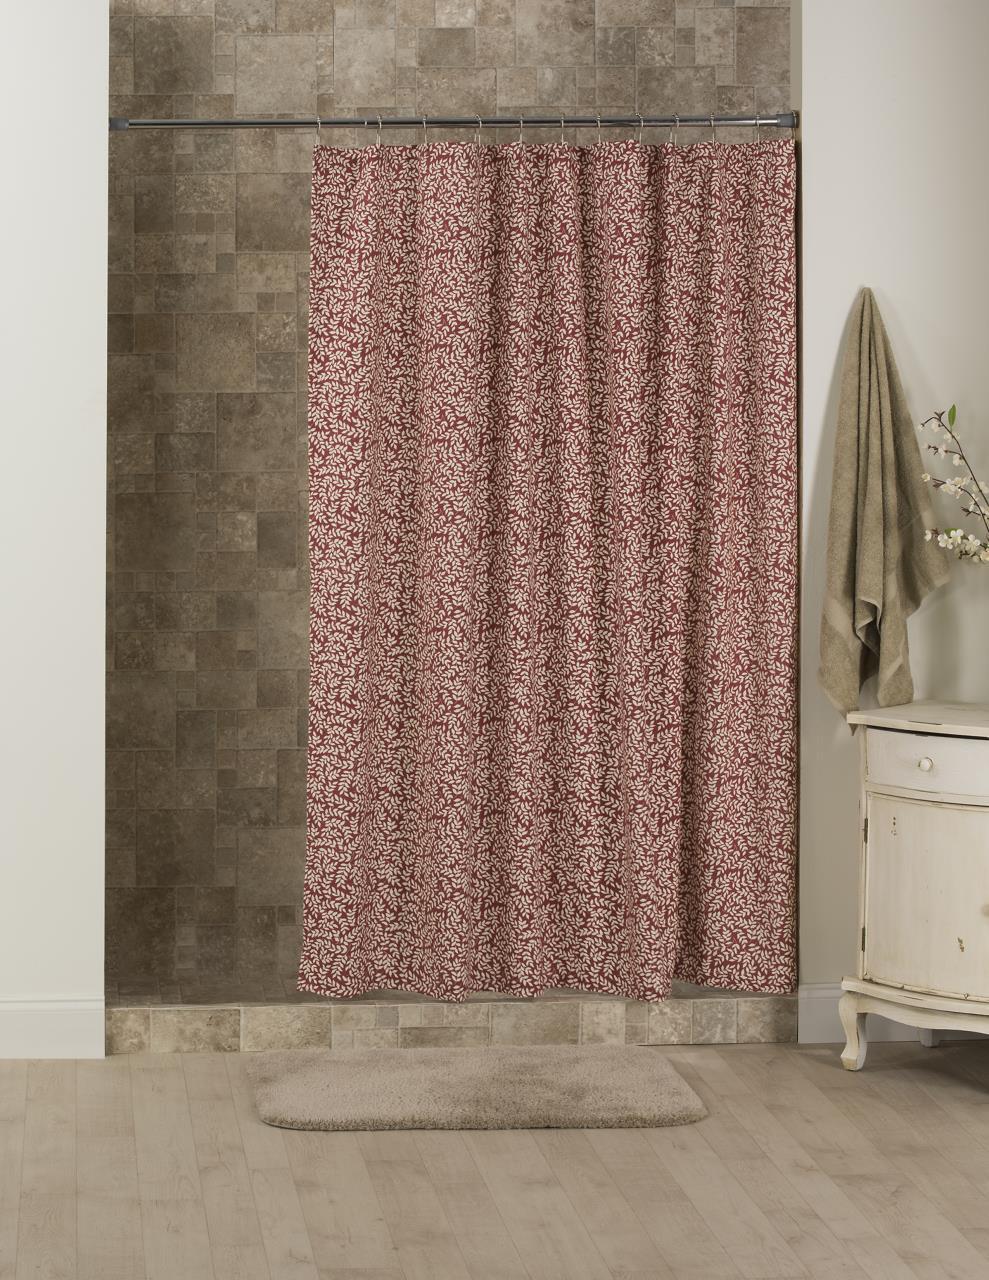 Bouvier Red Leaf Shower Curtain - 138641170988